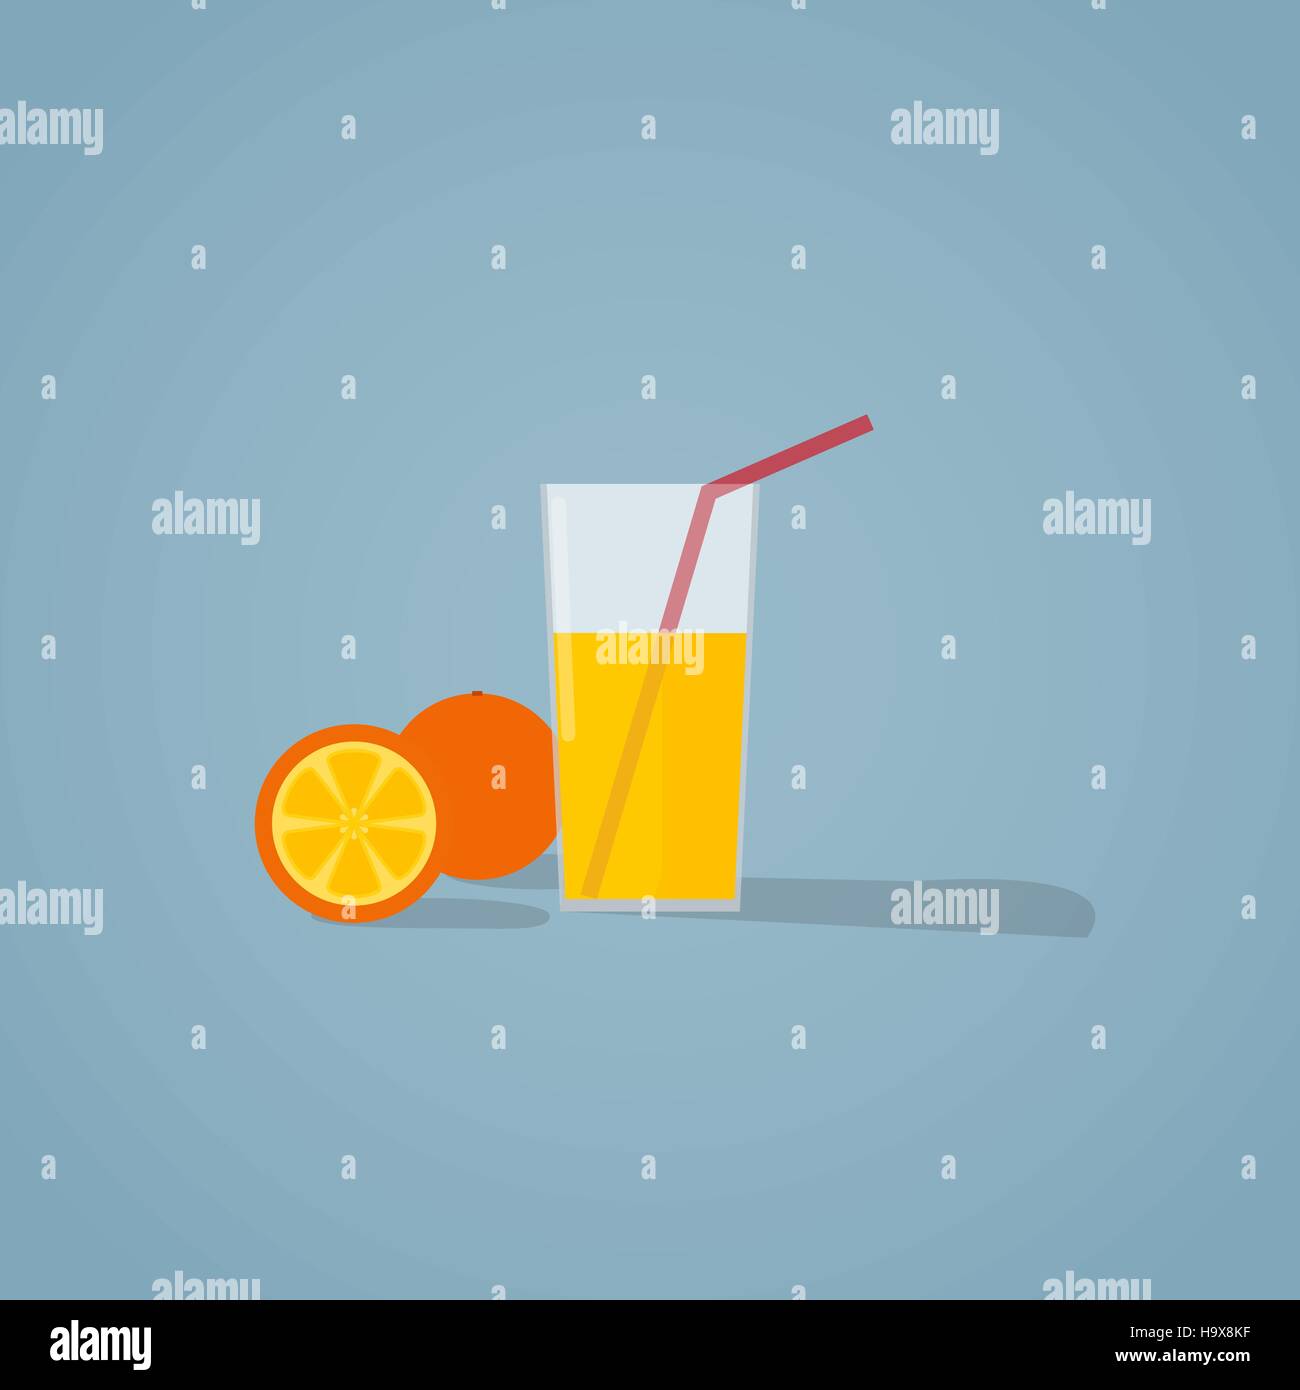 https://c8.alamy.com/comp/H9X8KF/flat-illustration-of-glass-of-natural-fresh-orange-juice-and-orange-H9X8KF.jpg